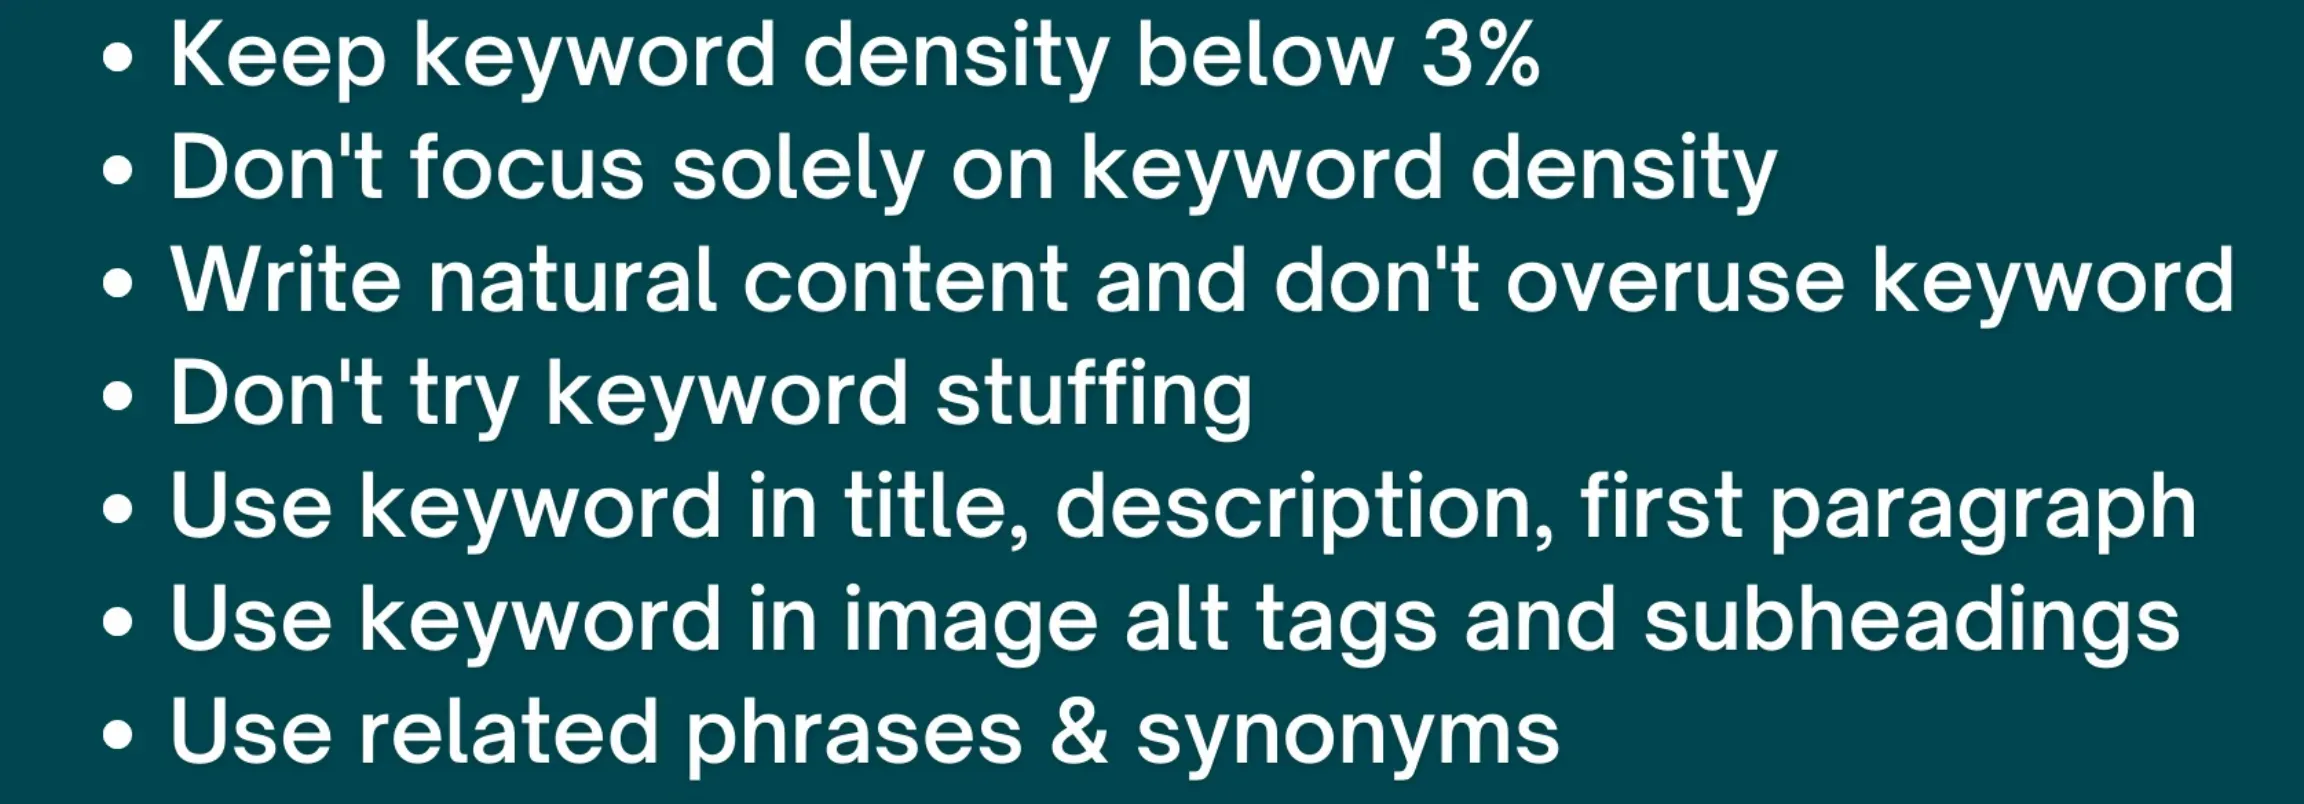 Best Practices For Keyword Density 